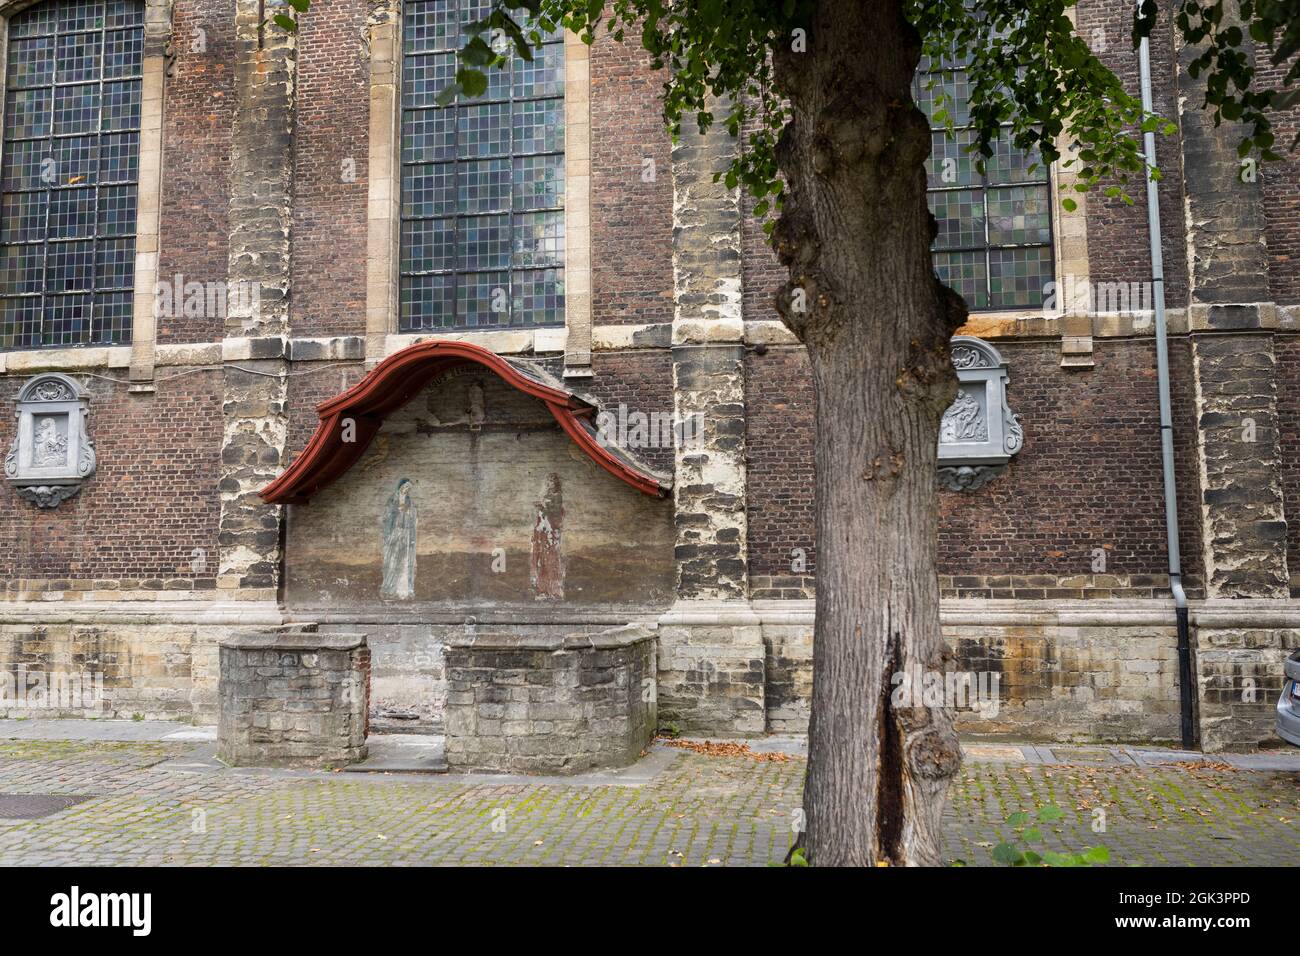 UNESCO-Weltkulturerbe mit mittelalterlichem Beginenhof in Gent, Belgien Stockfoto